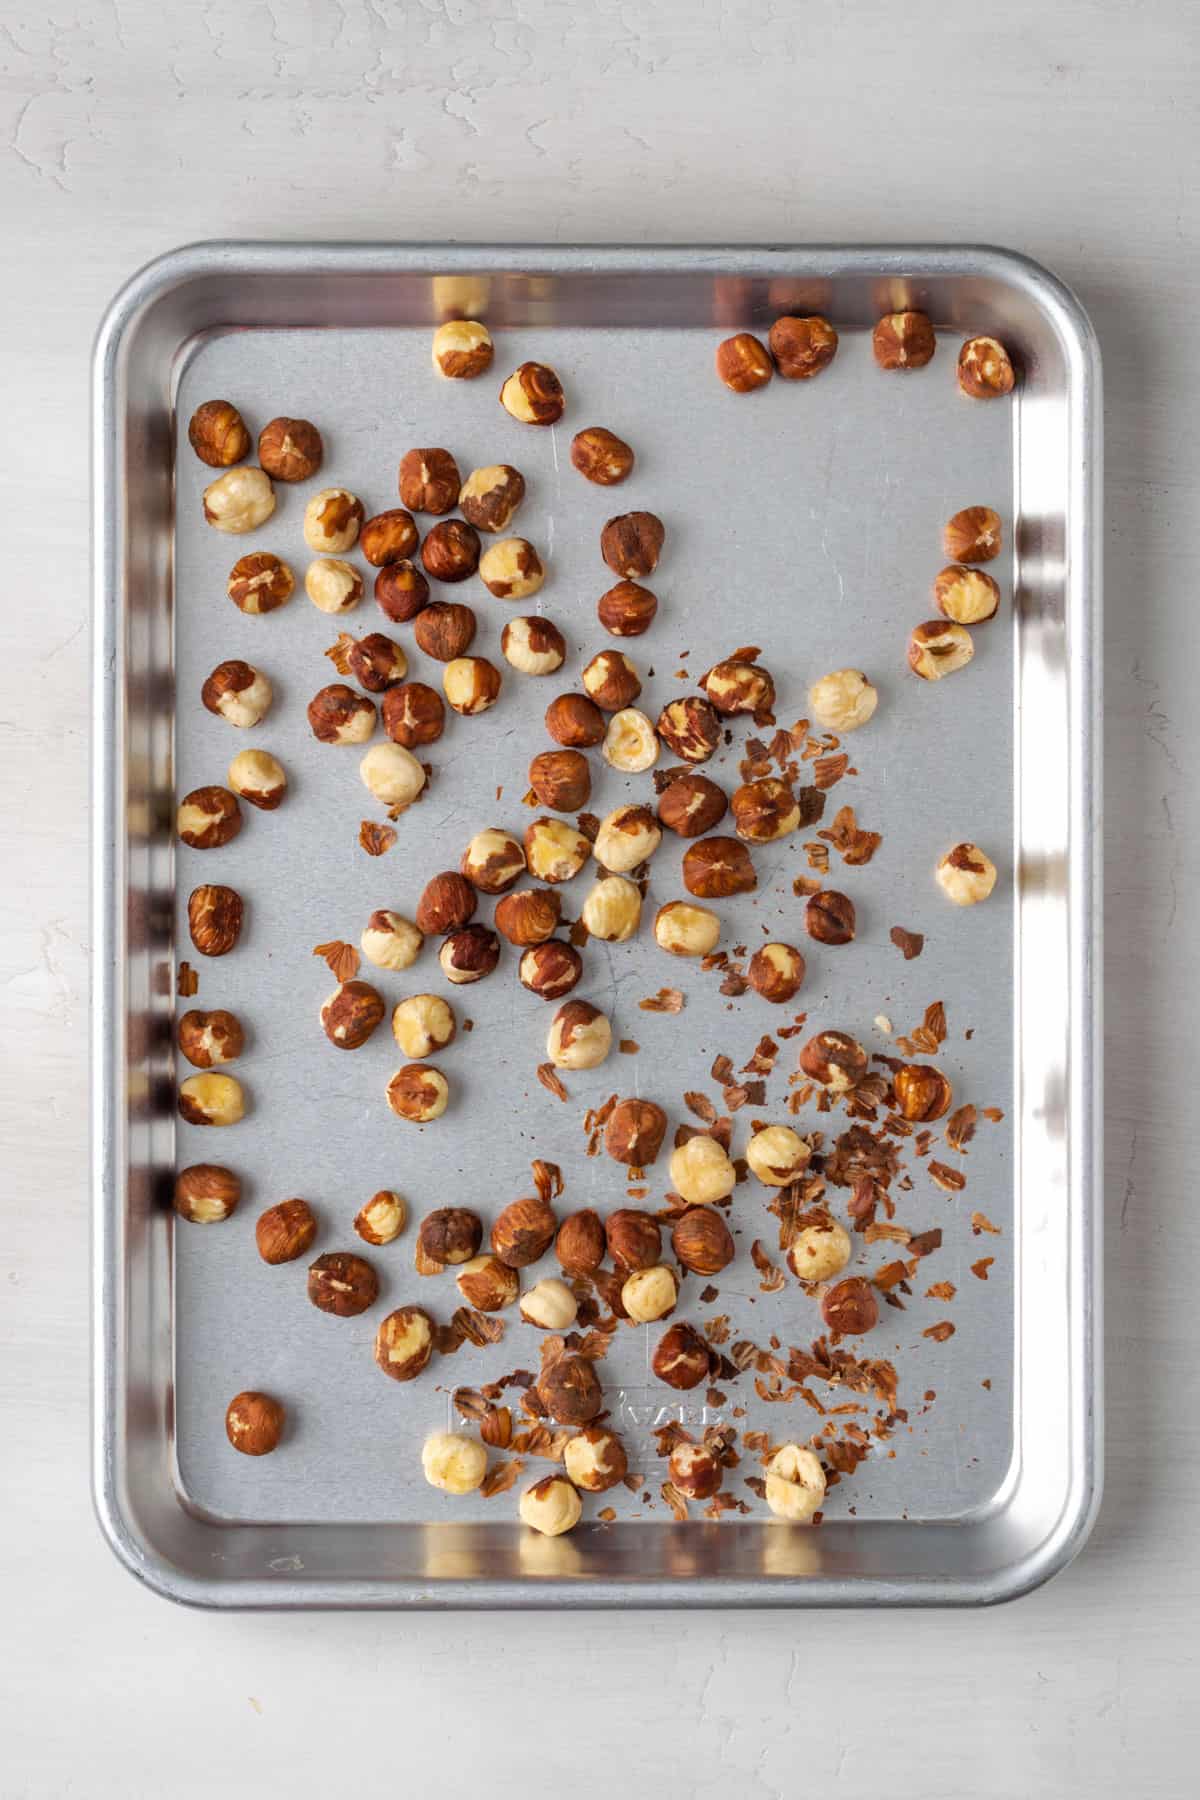 Raw hazelnuts on a metal baking tray.